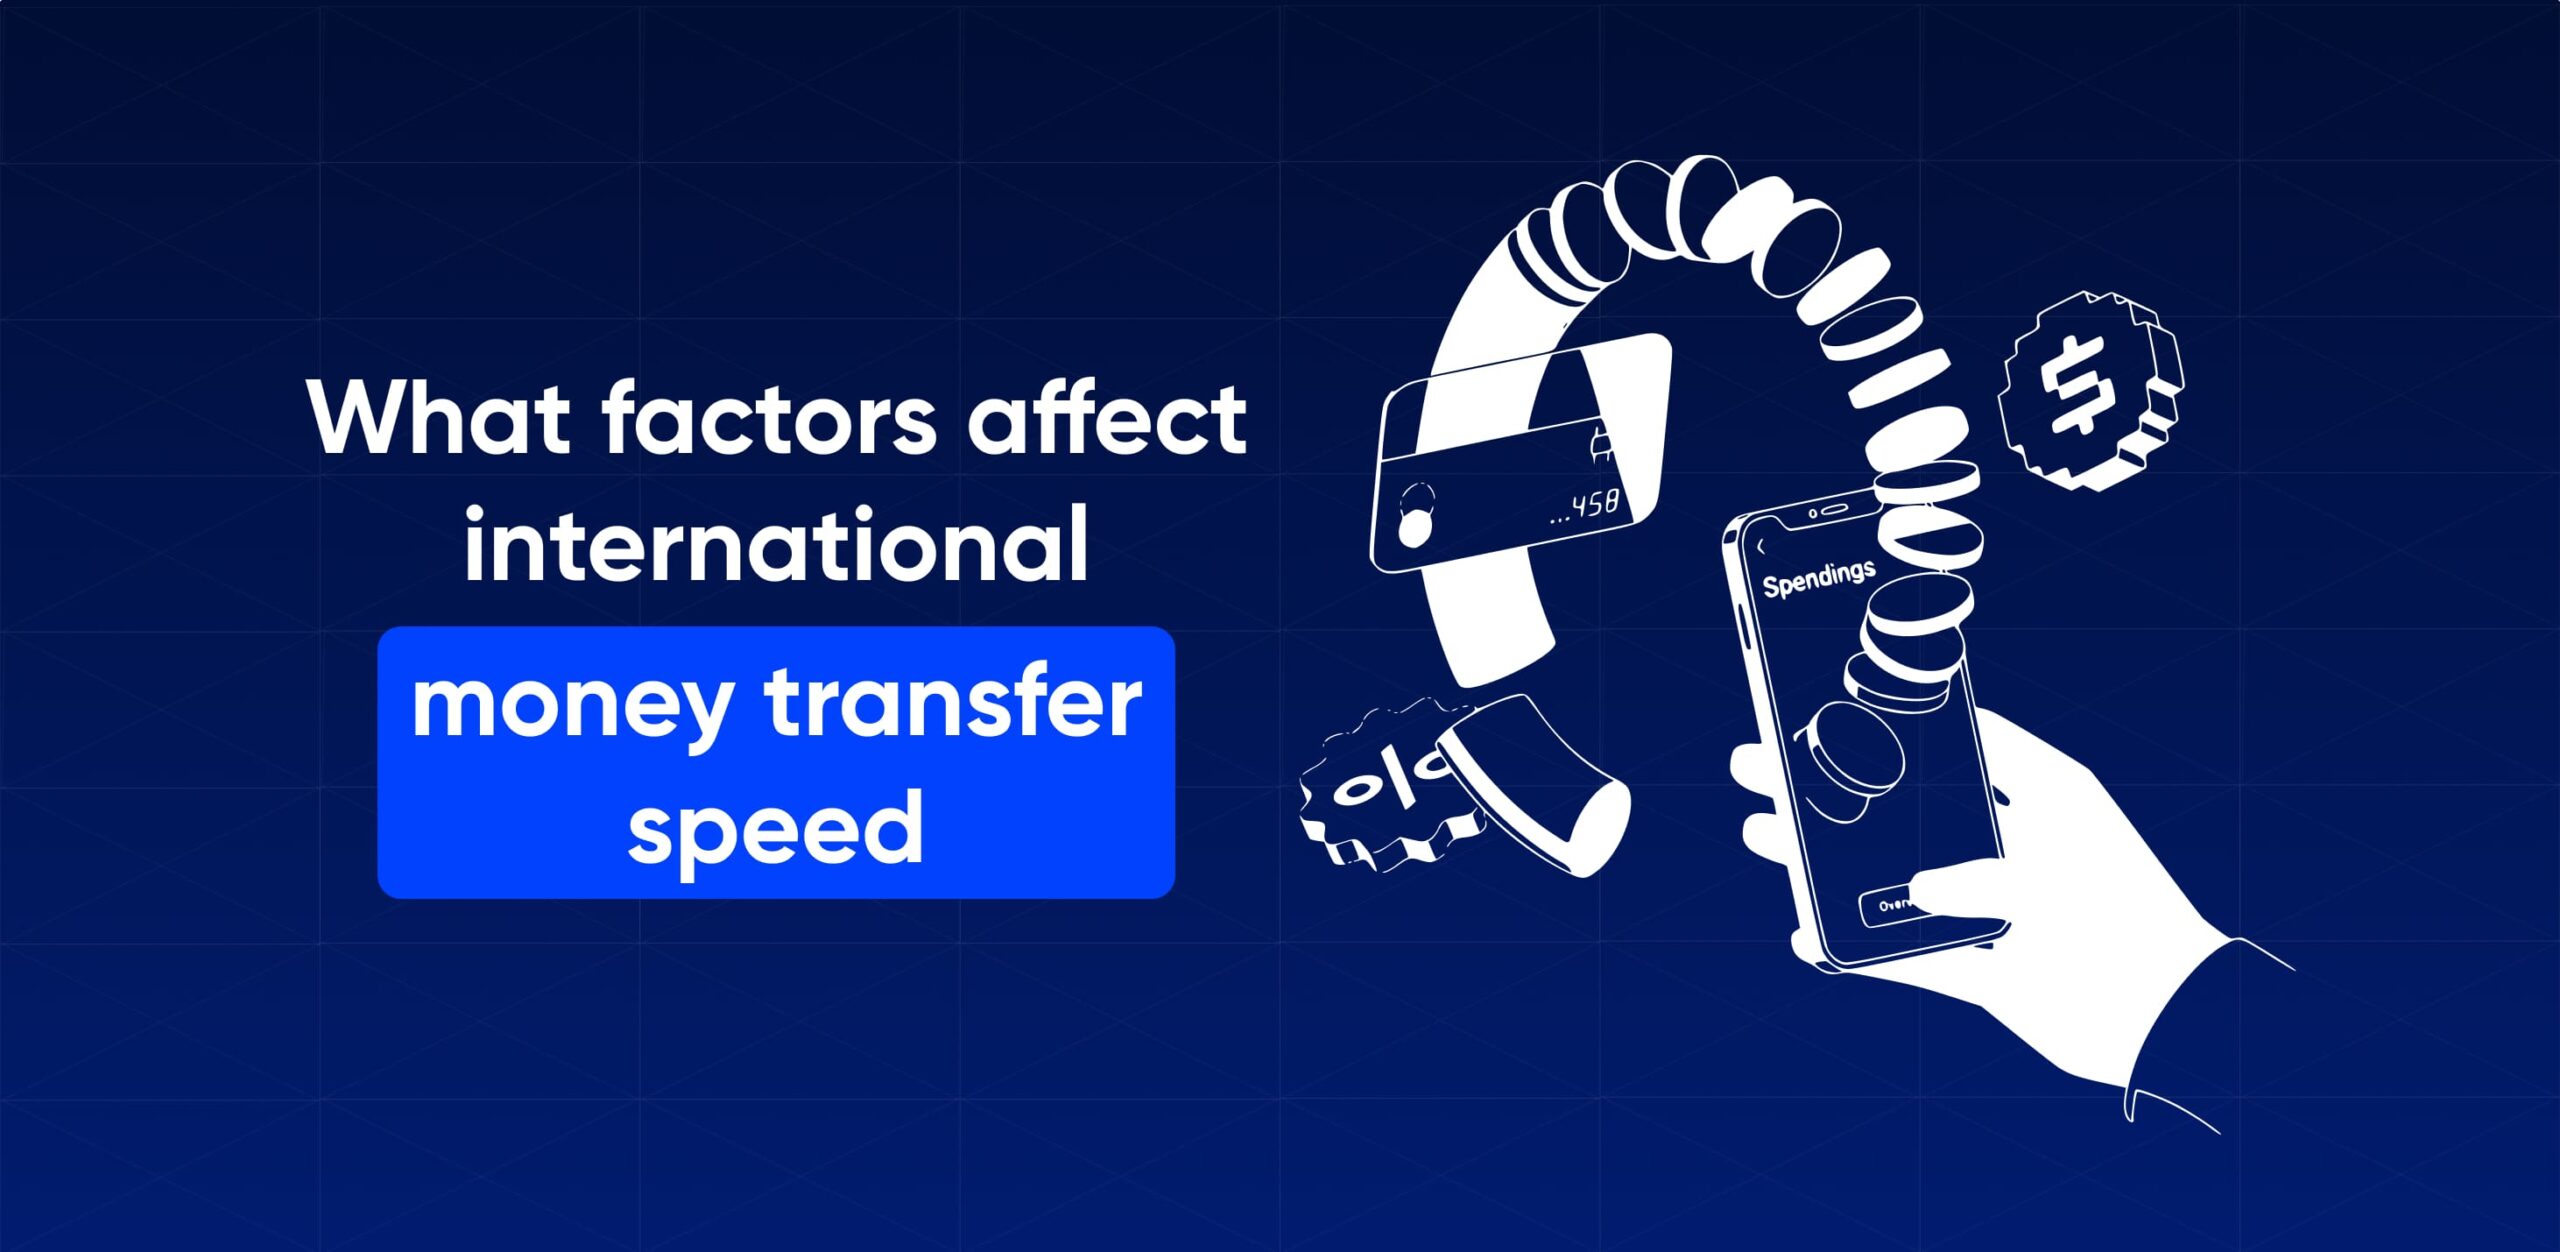 What factors affect international money transfer speed